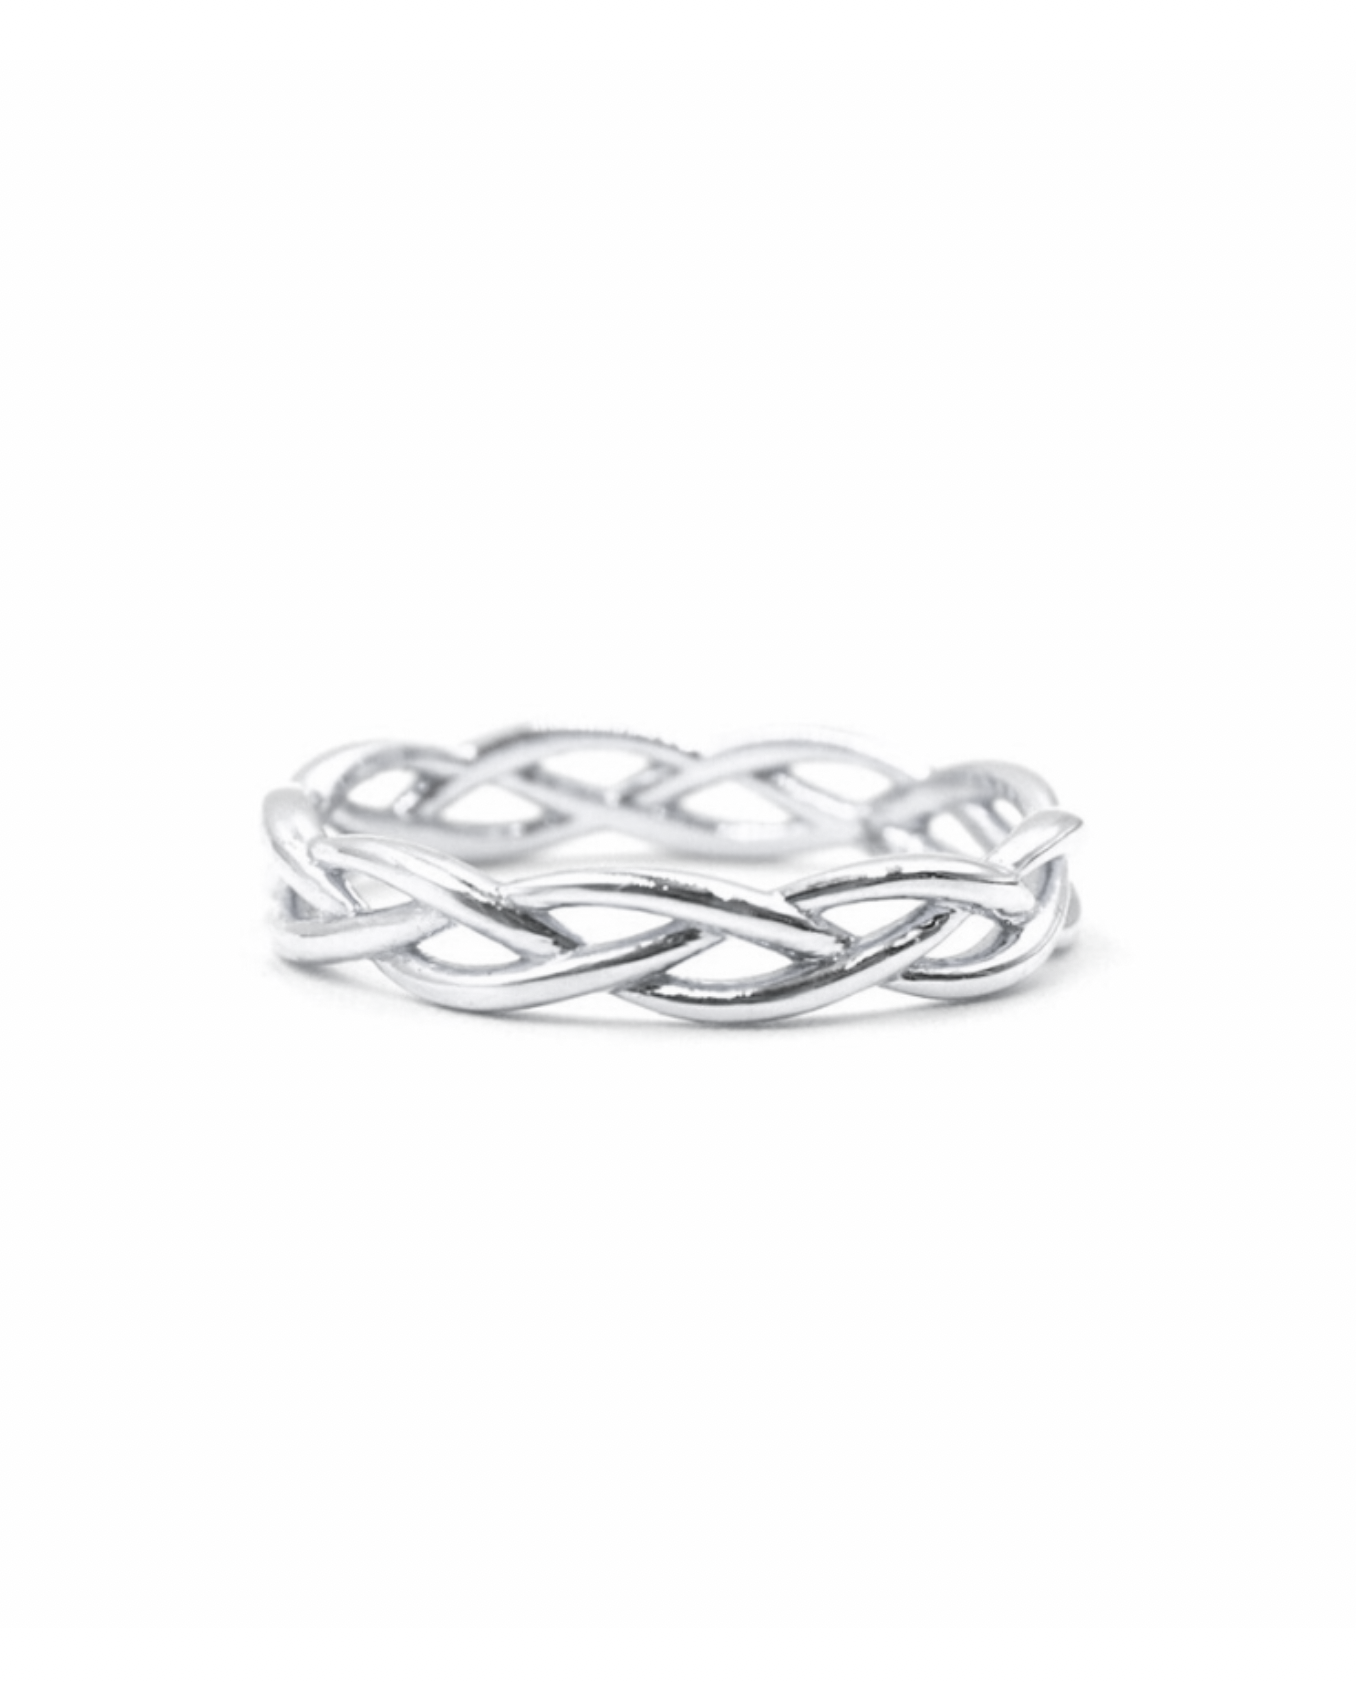 10 Karat White Gold Open Weave Ring